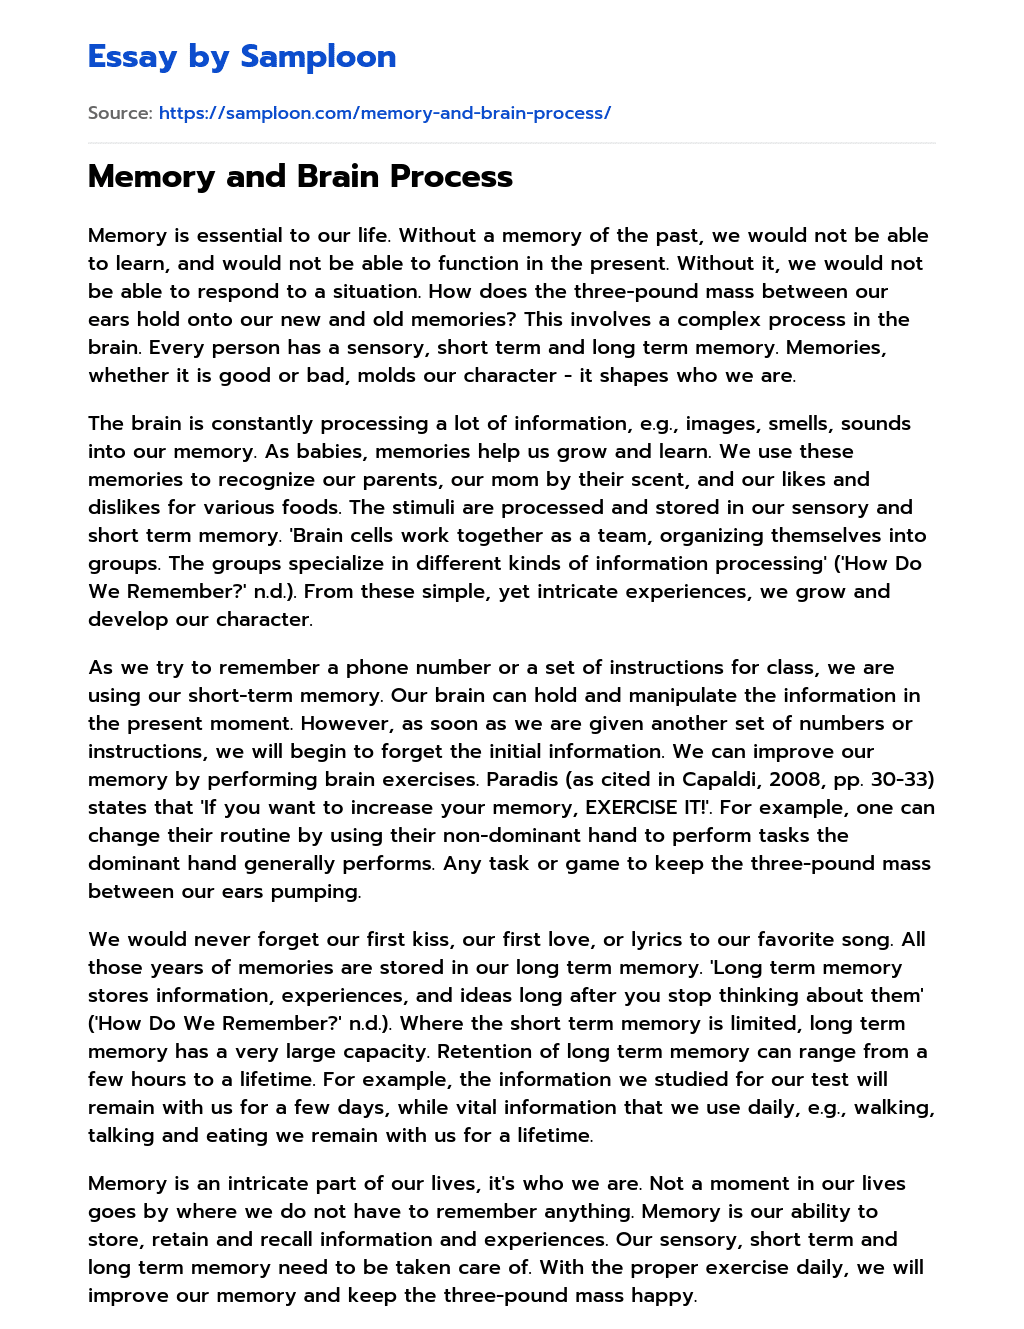 Memory and Brain Process essay